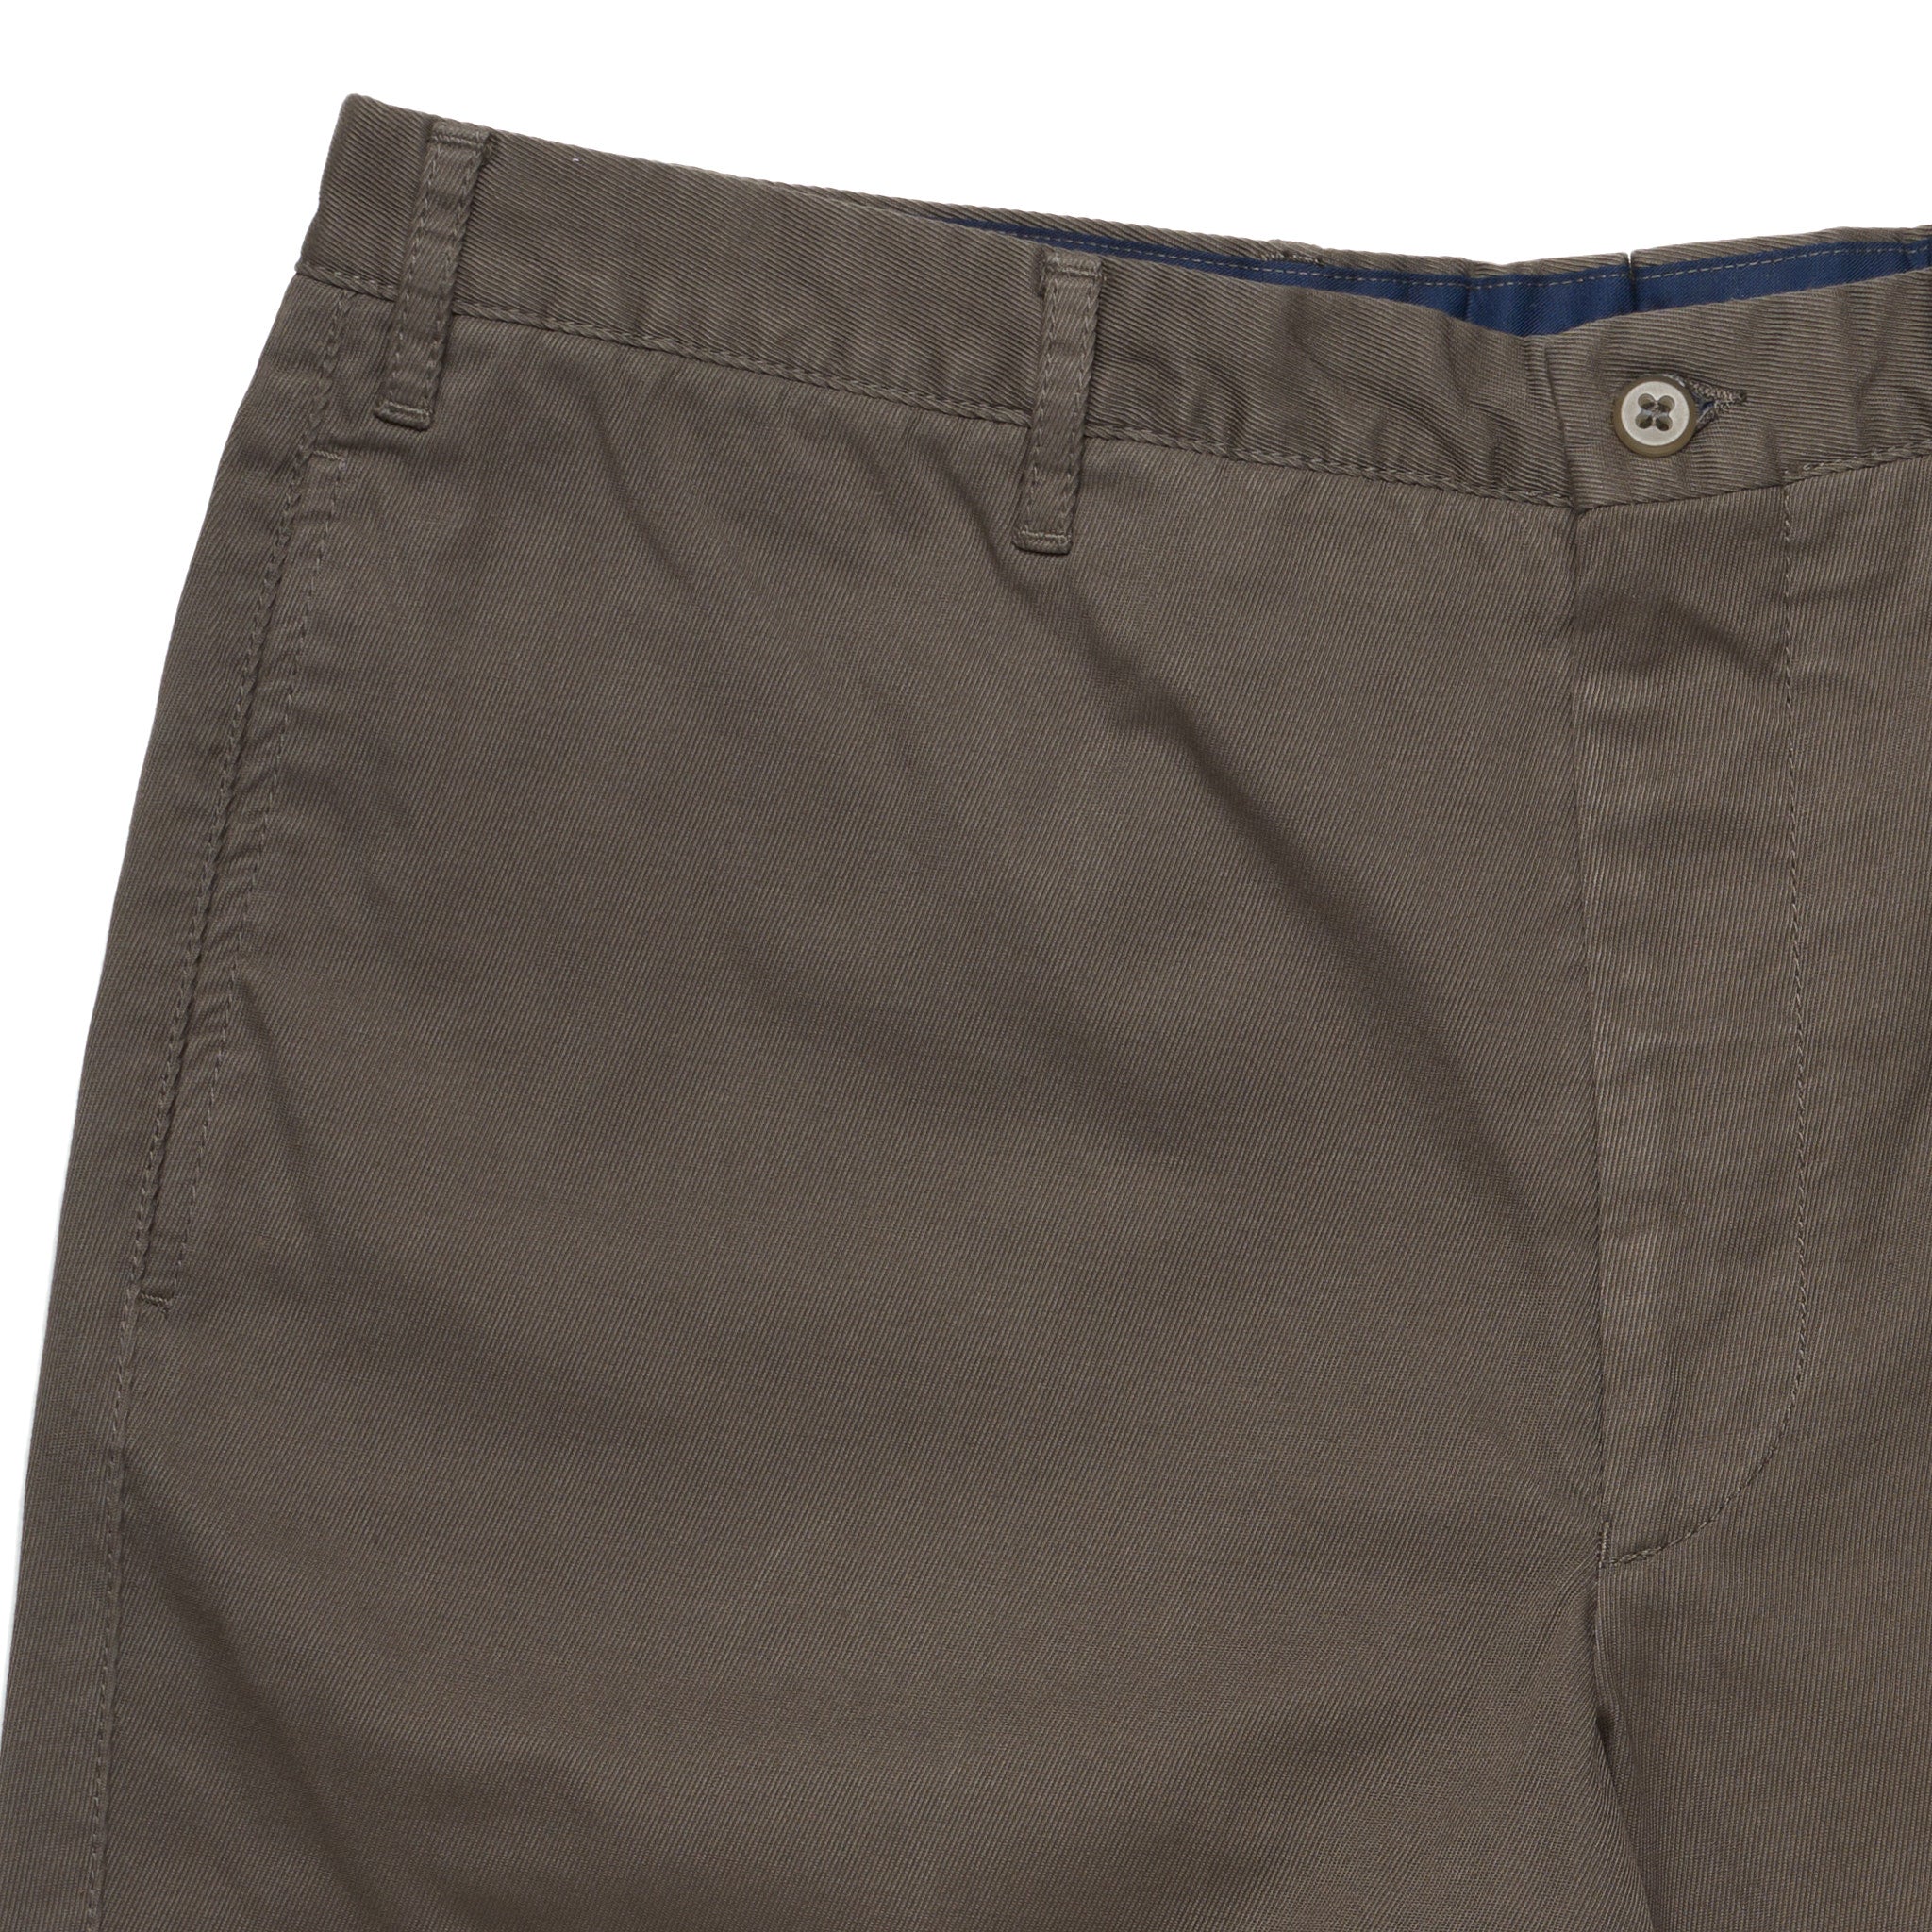 FEDELI "Jeans Dusty System" Charcoal Gray Cotton Twill Bermuda Shorts 56 NEW 40 FEDELI